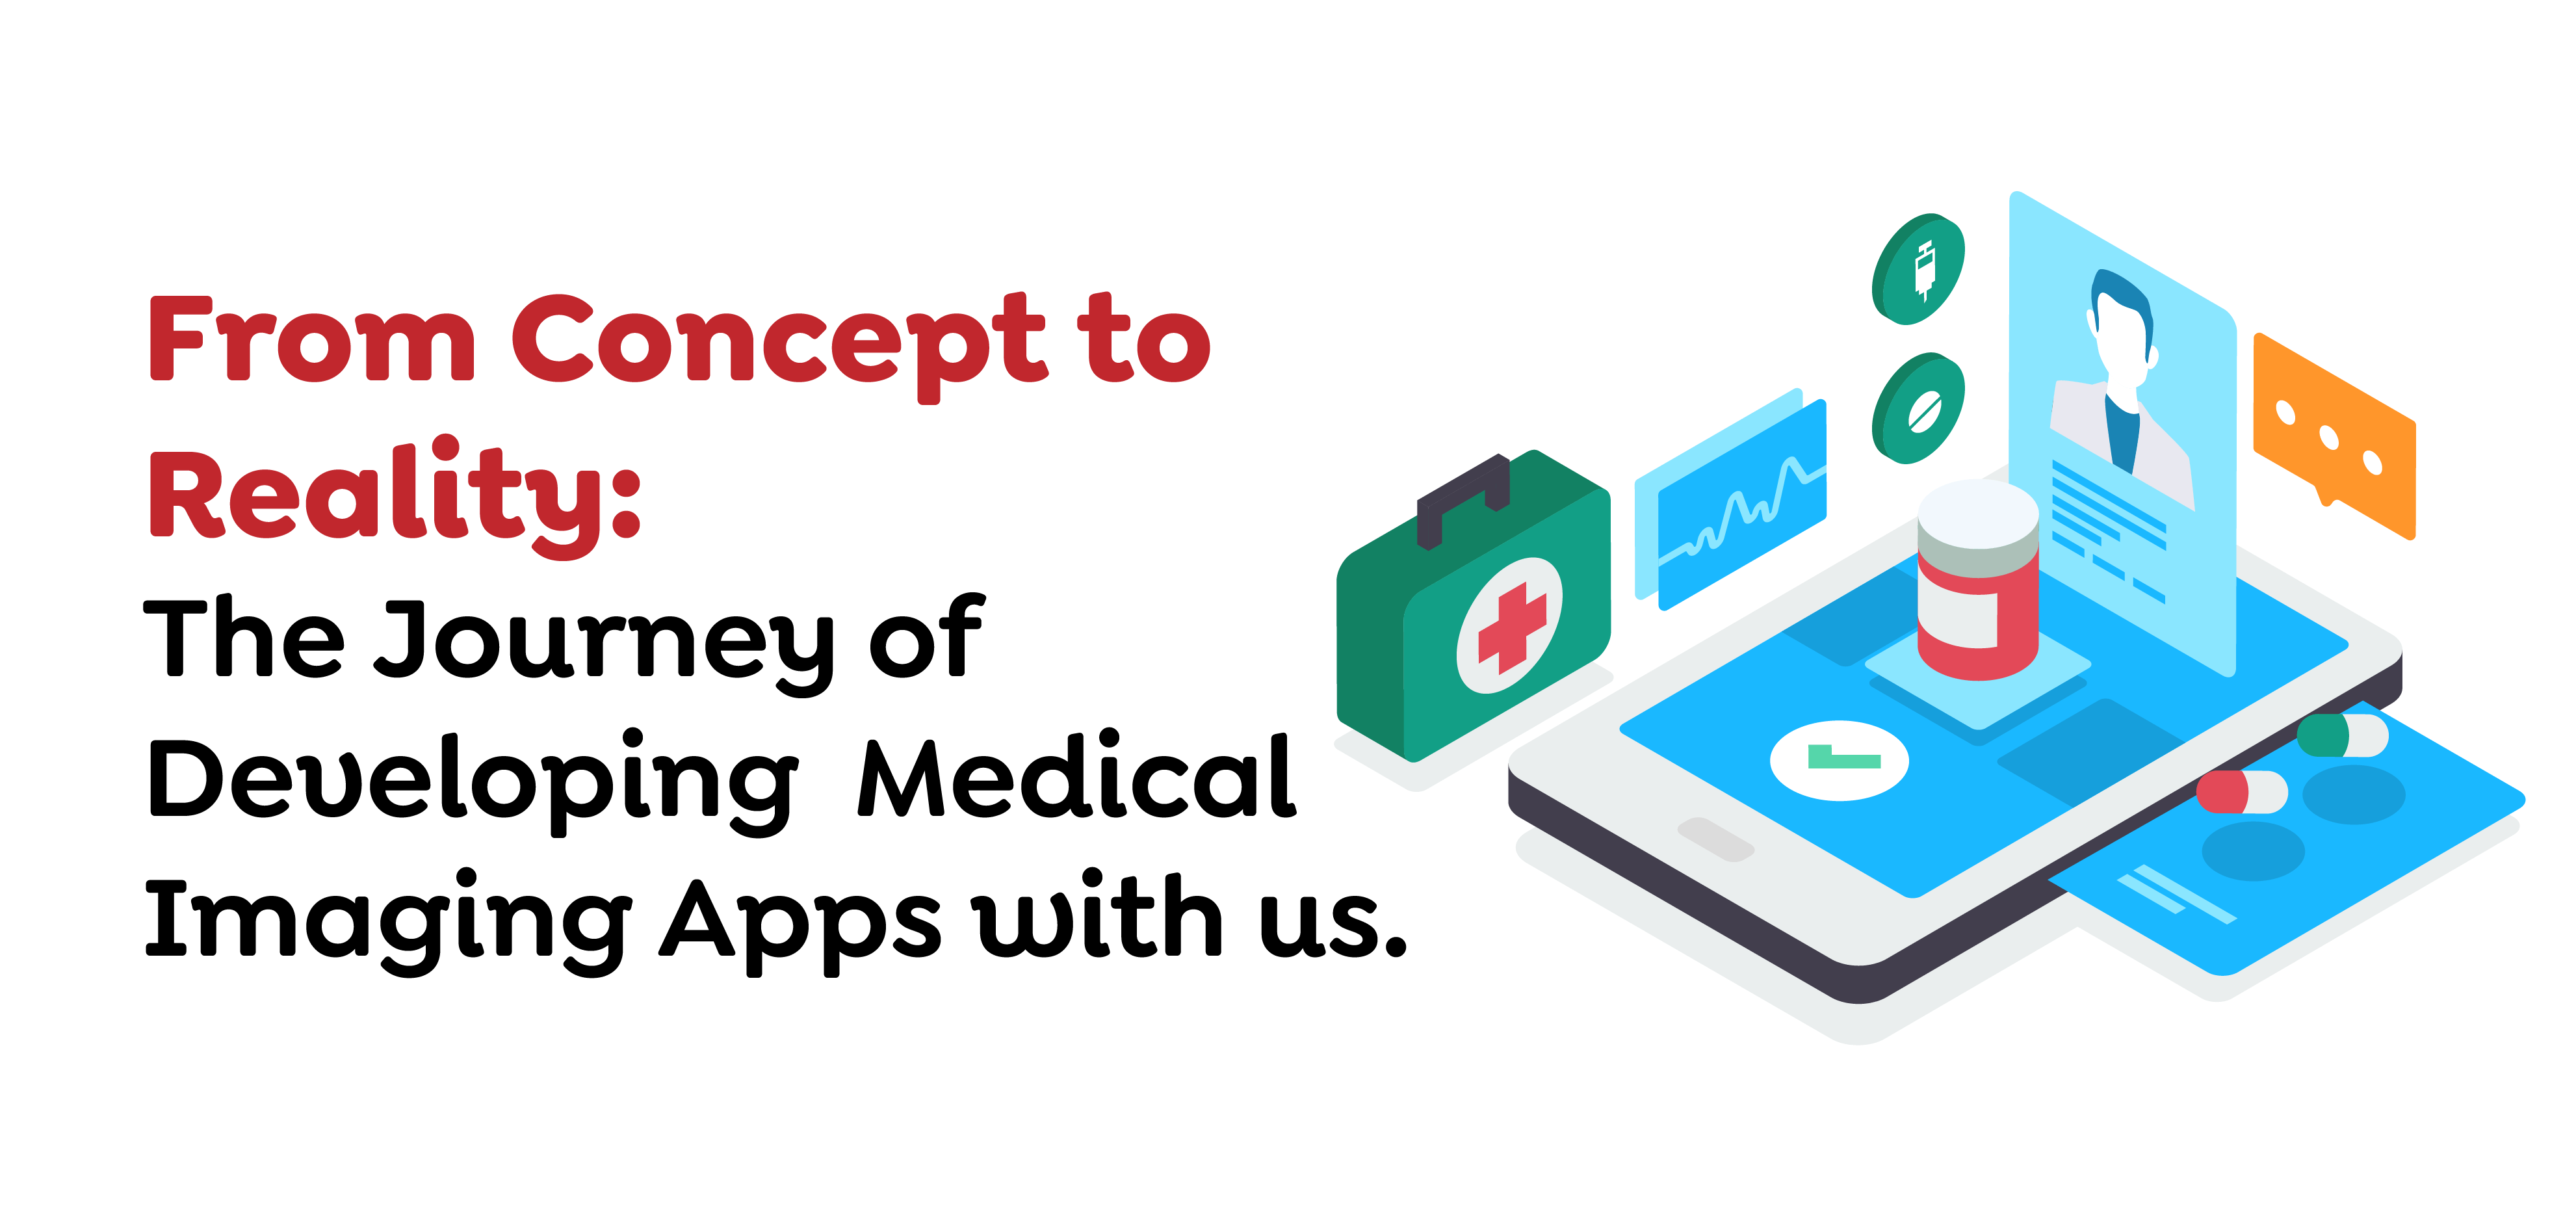 Developing Medical Imaging Apps